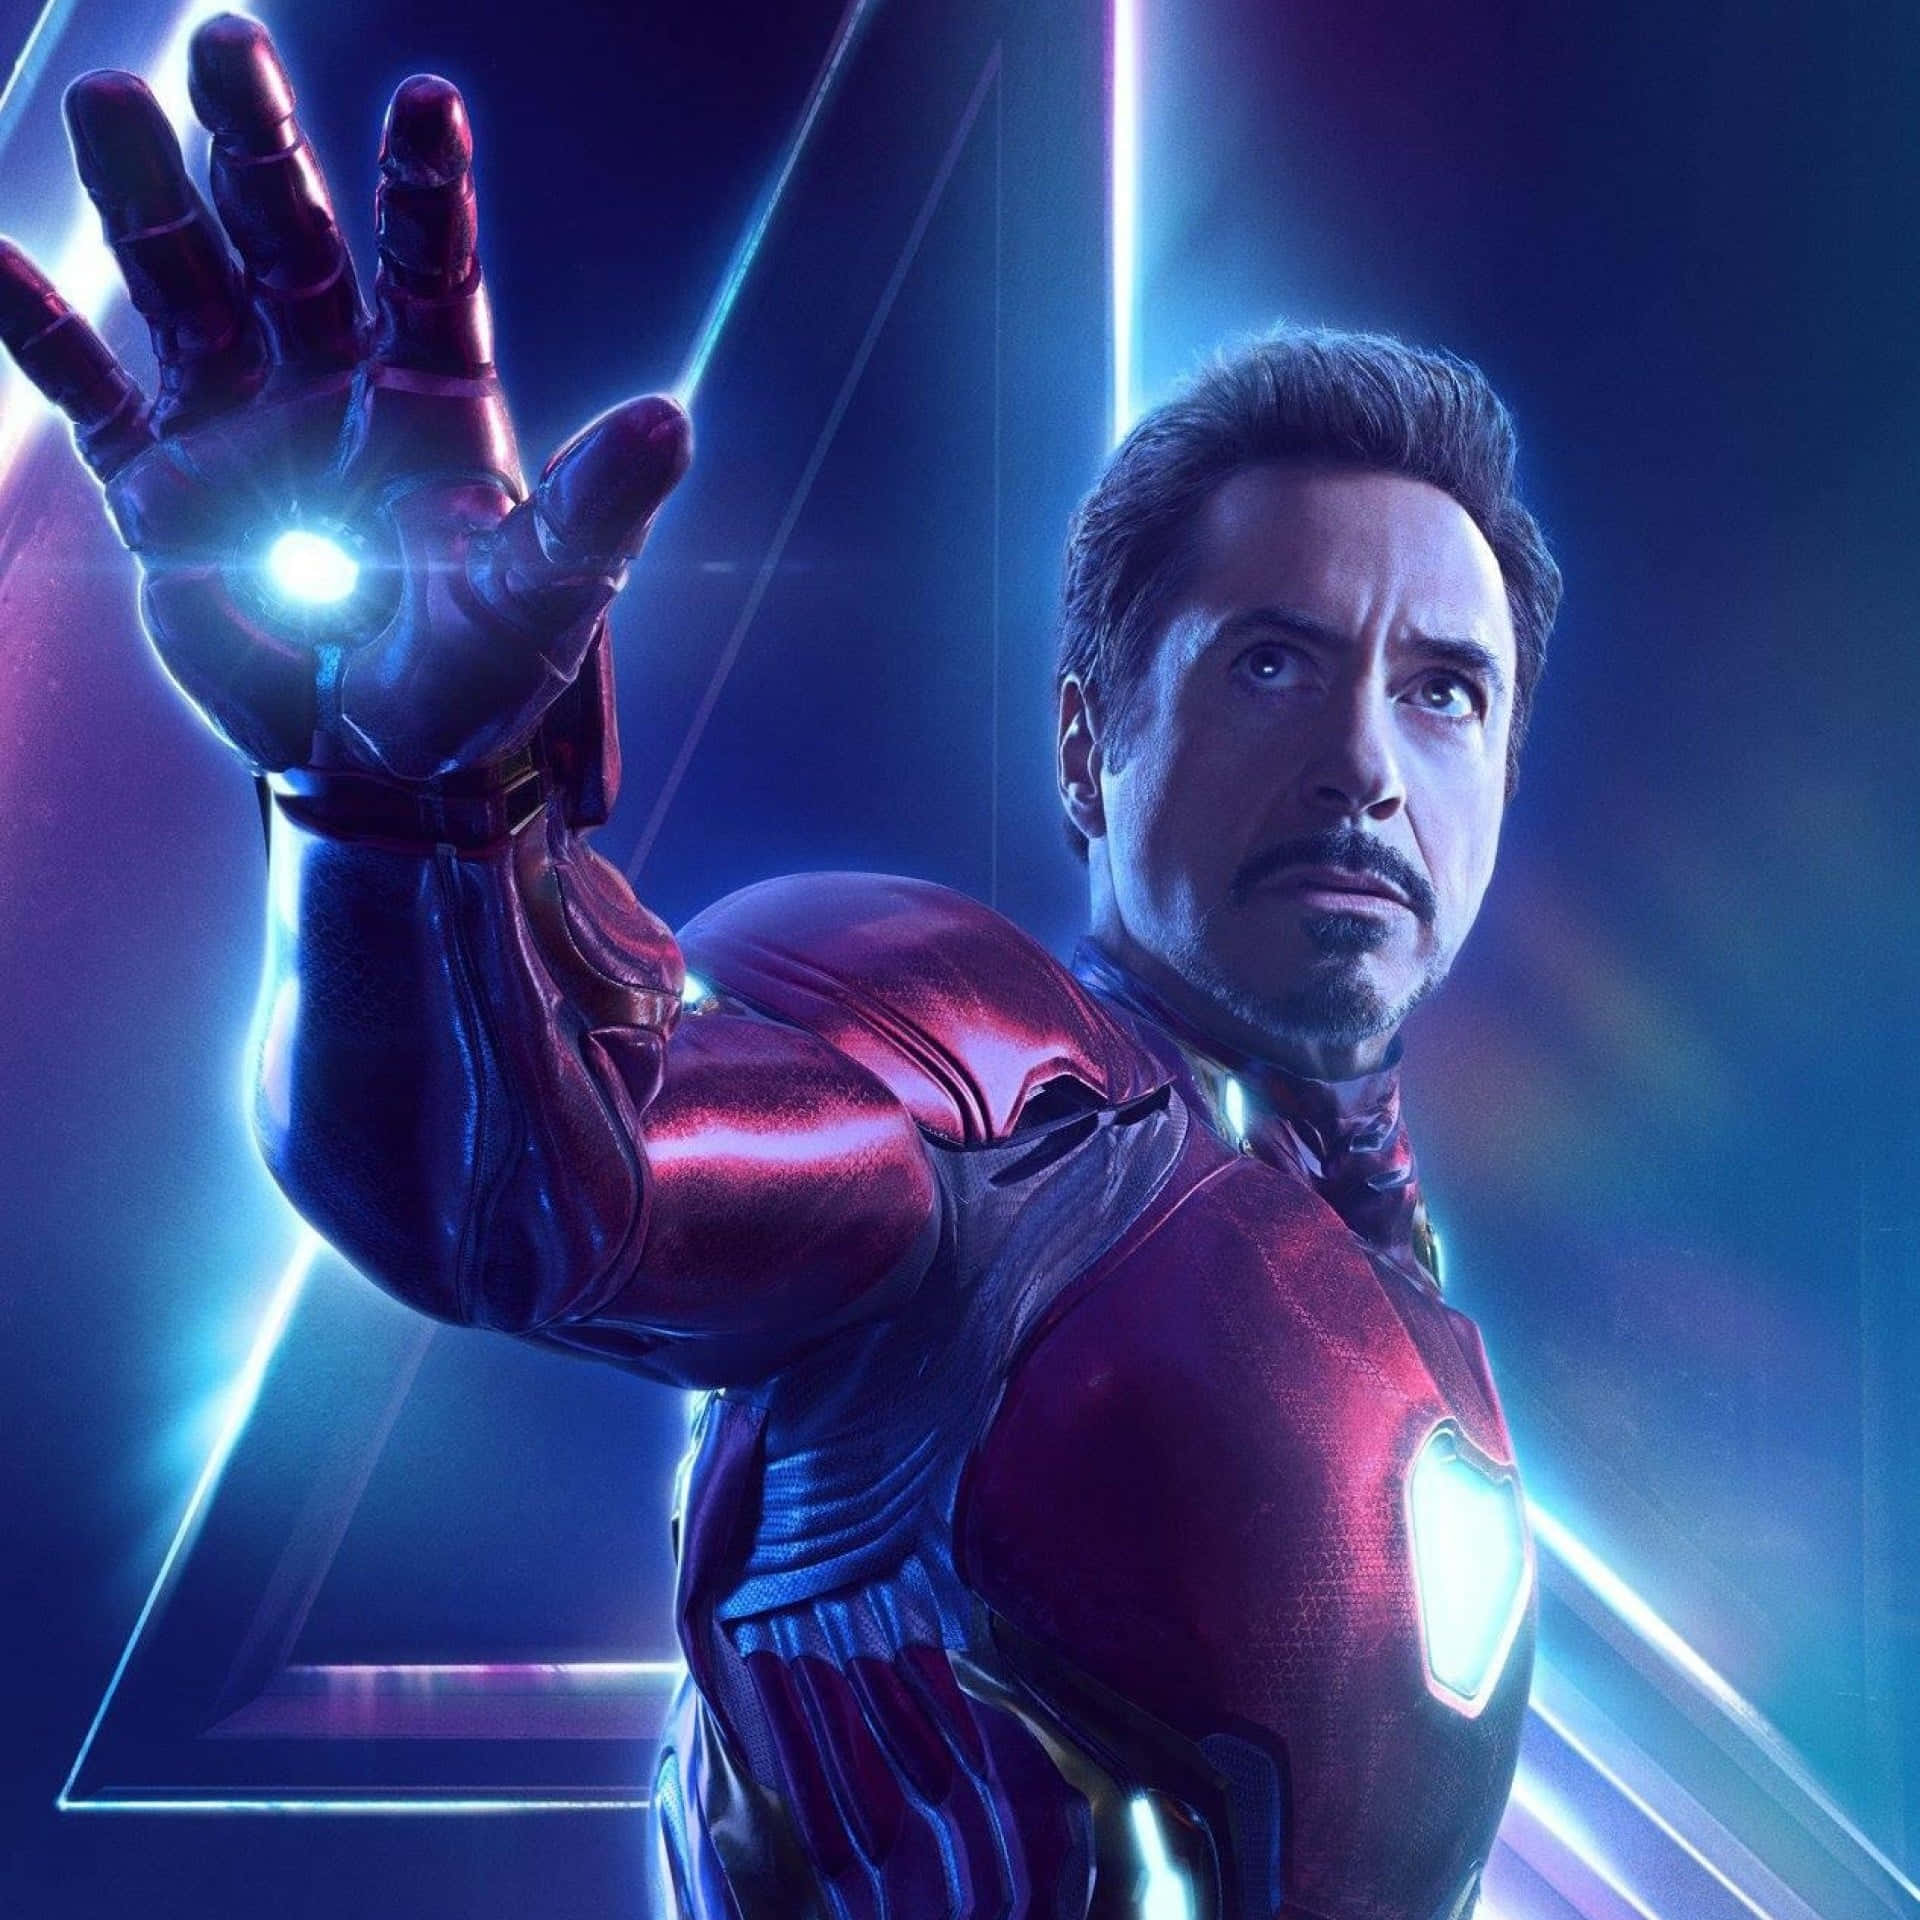 Iron Man Avengers Endgame Poster Picture